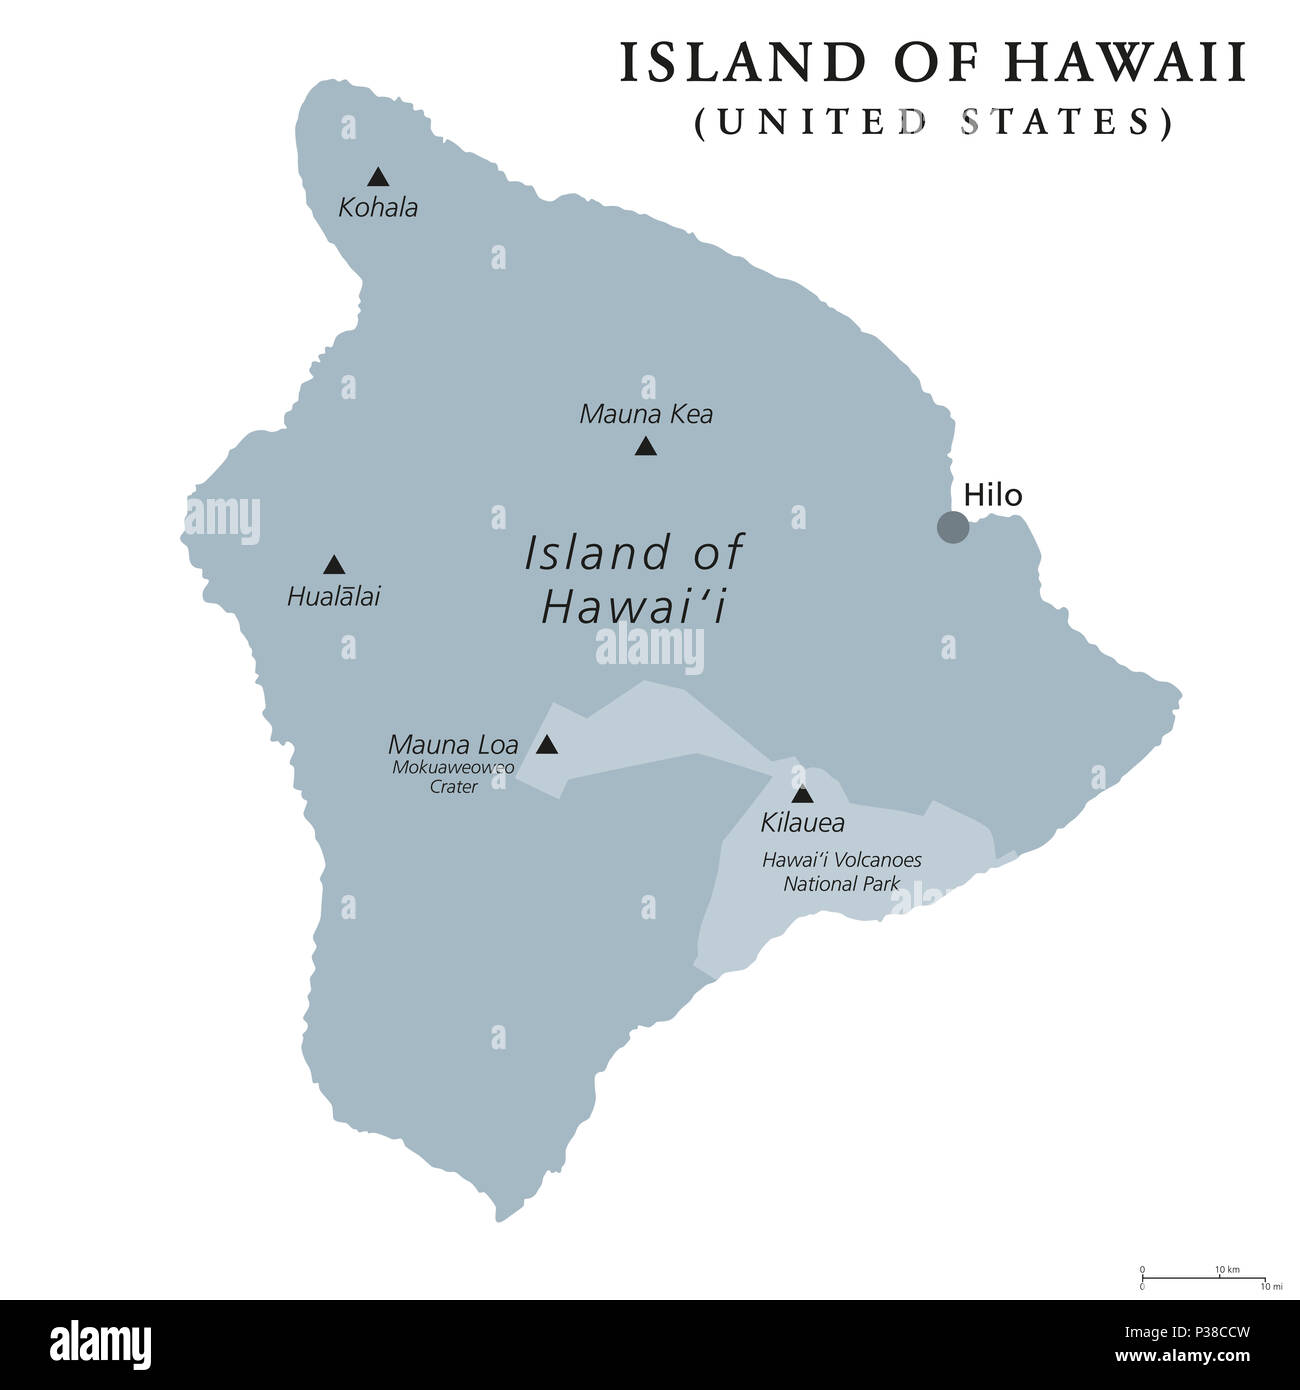 Island of Hawaii, gray colored political map. Largest island in the U.S. State of Hawaii in the North Pacific Ocean. Big Island, Big I, Hawaii Island. Stock Photo